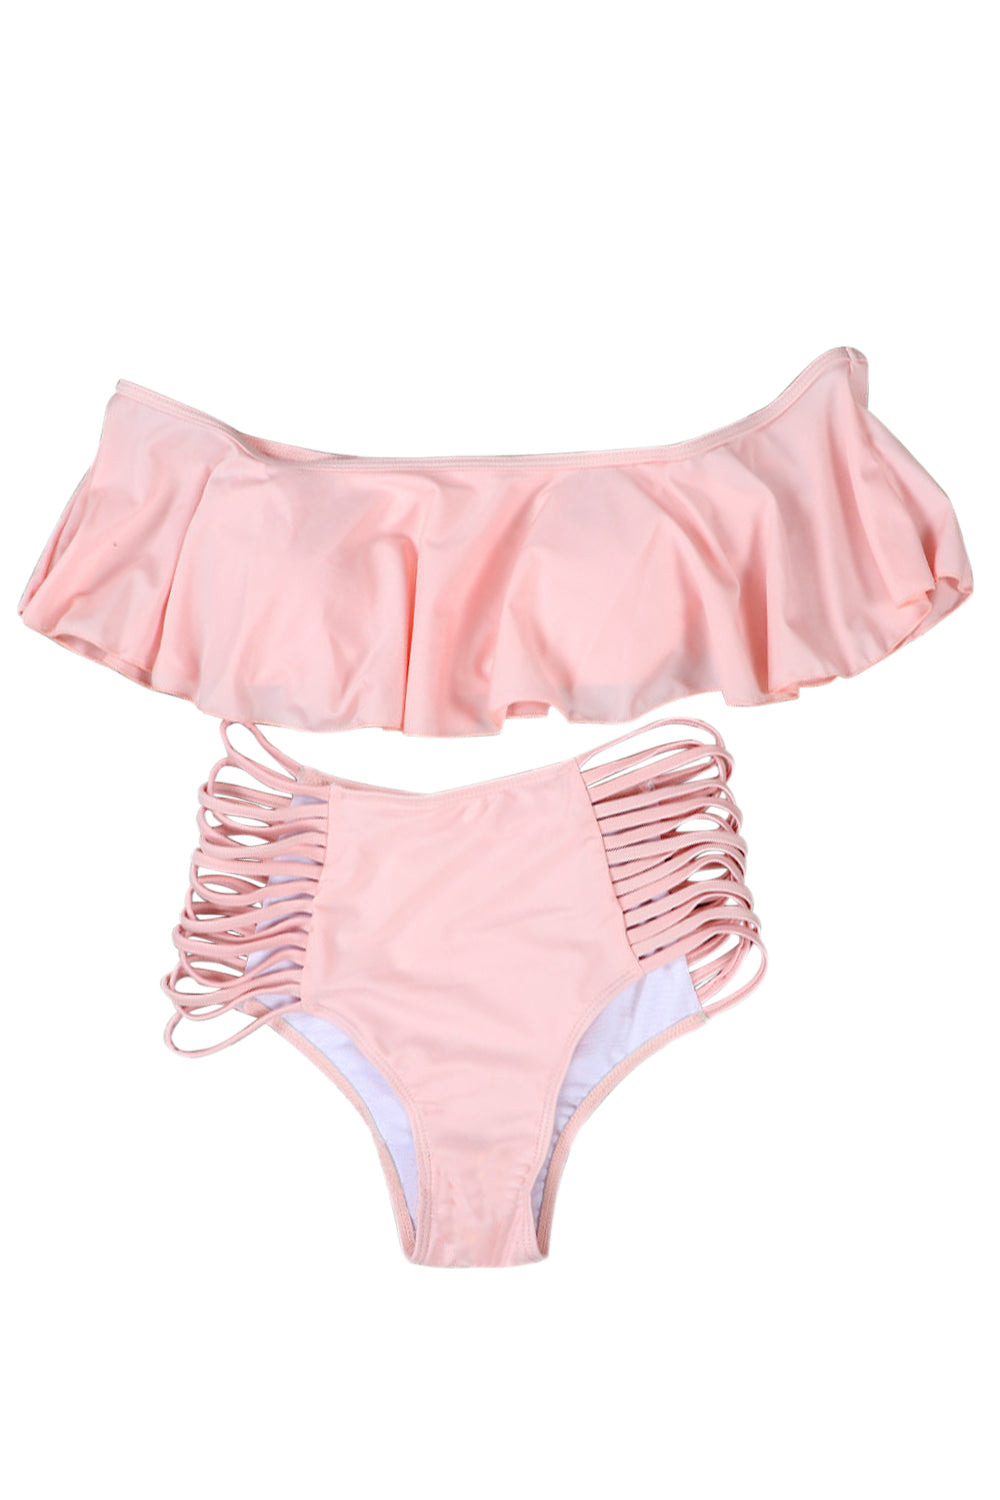 Iyasson Pink Falbala Bikini Set